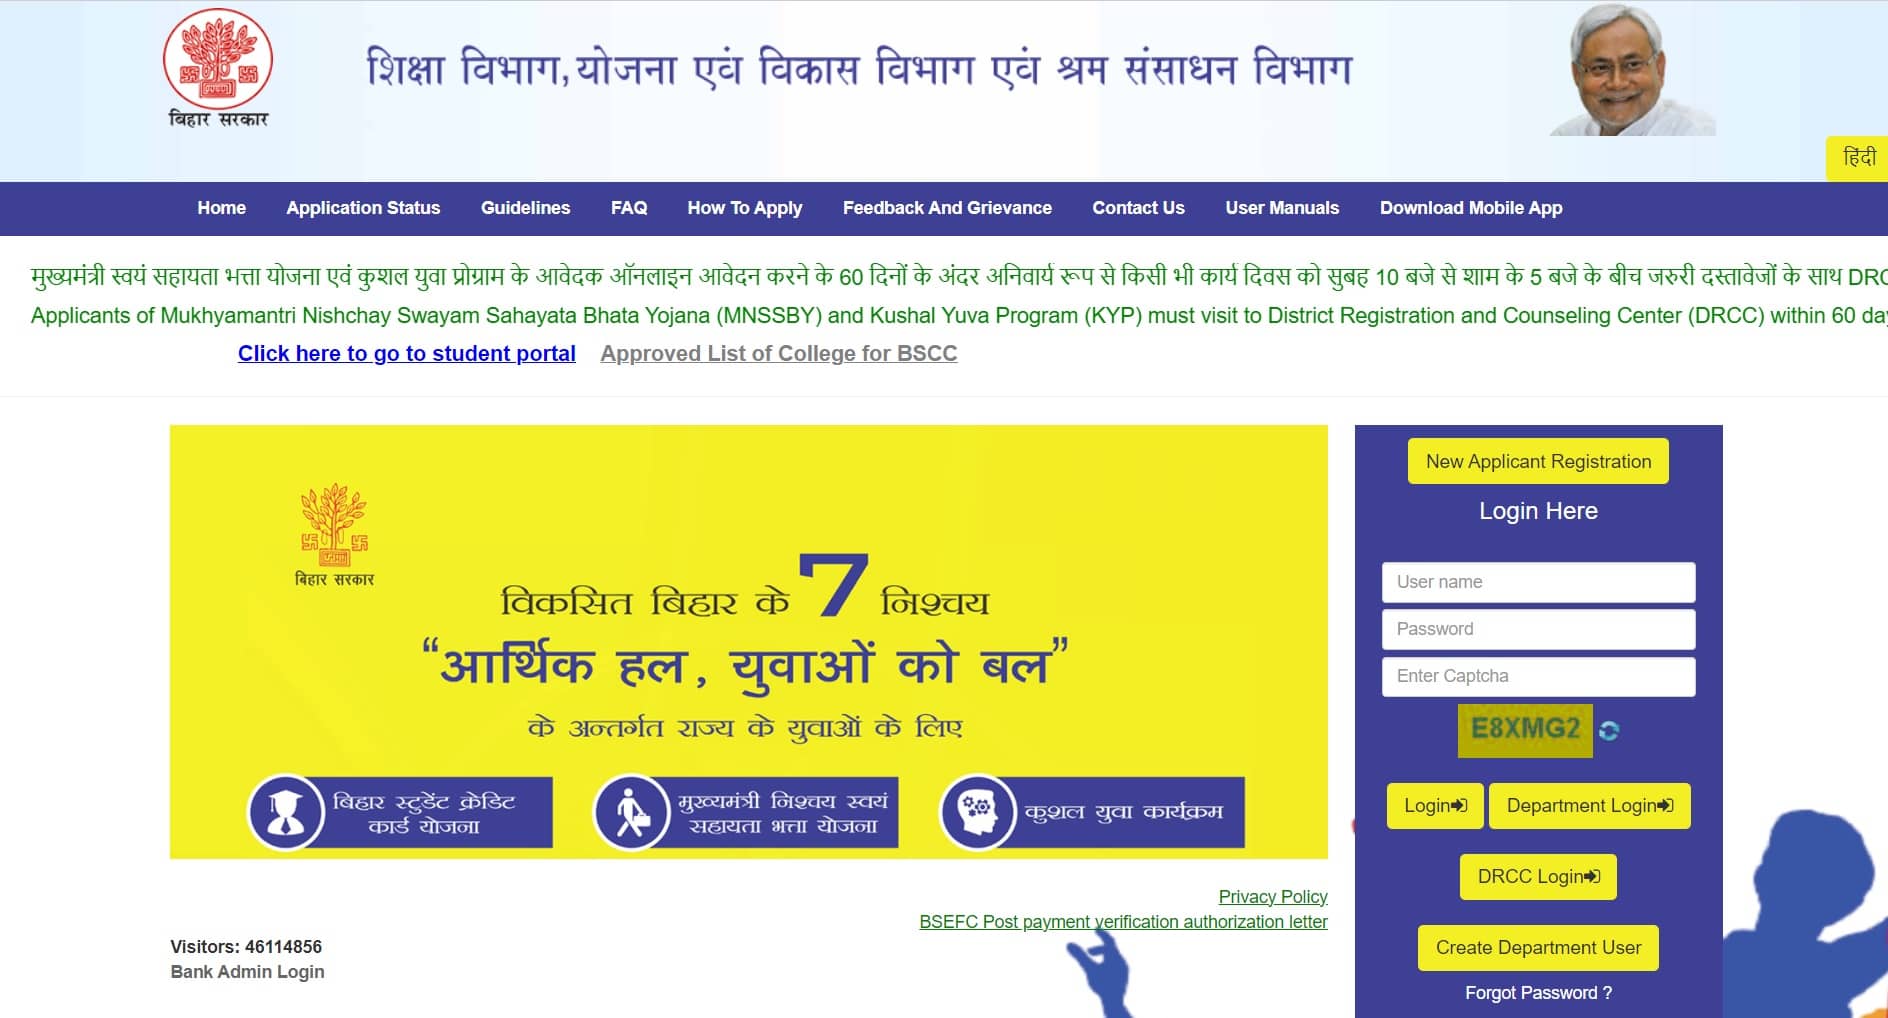 Bihar student credit card scheme online apply आवेदन प्रक्रिया की सम्पूर्ण जानकारी